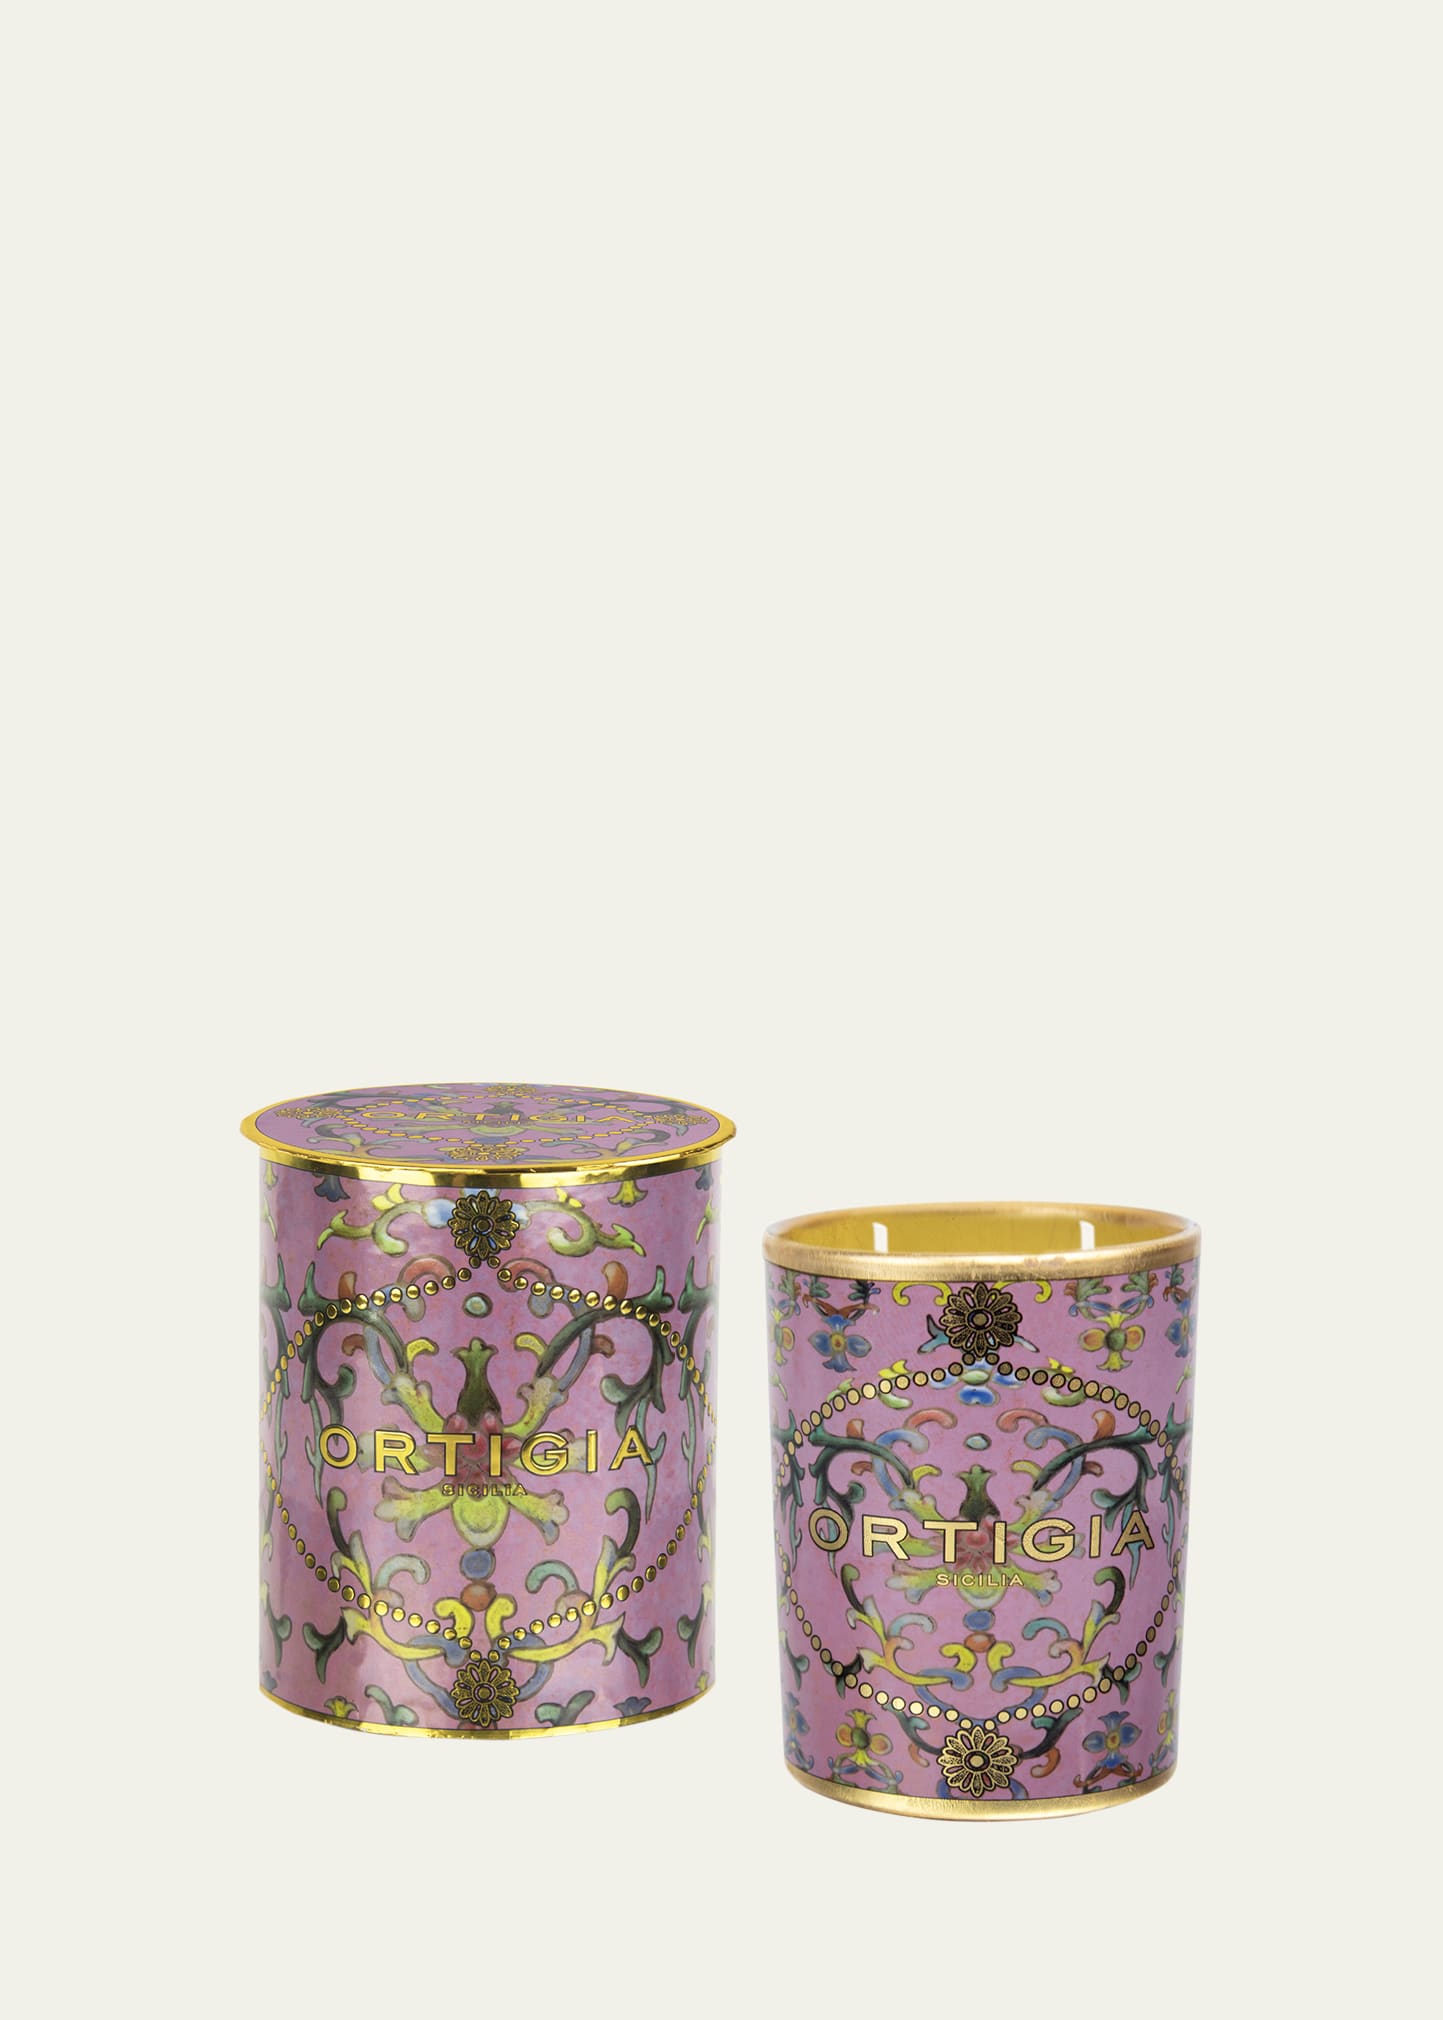 Aragona Medium Decorated Candle, 13.4 oz.